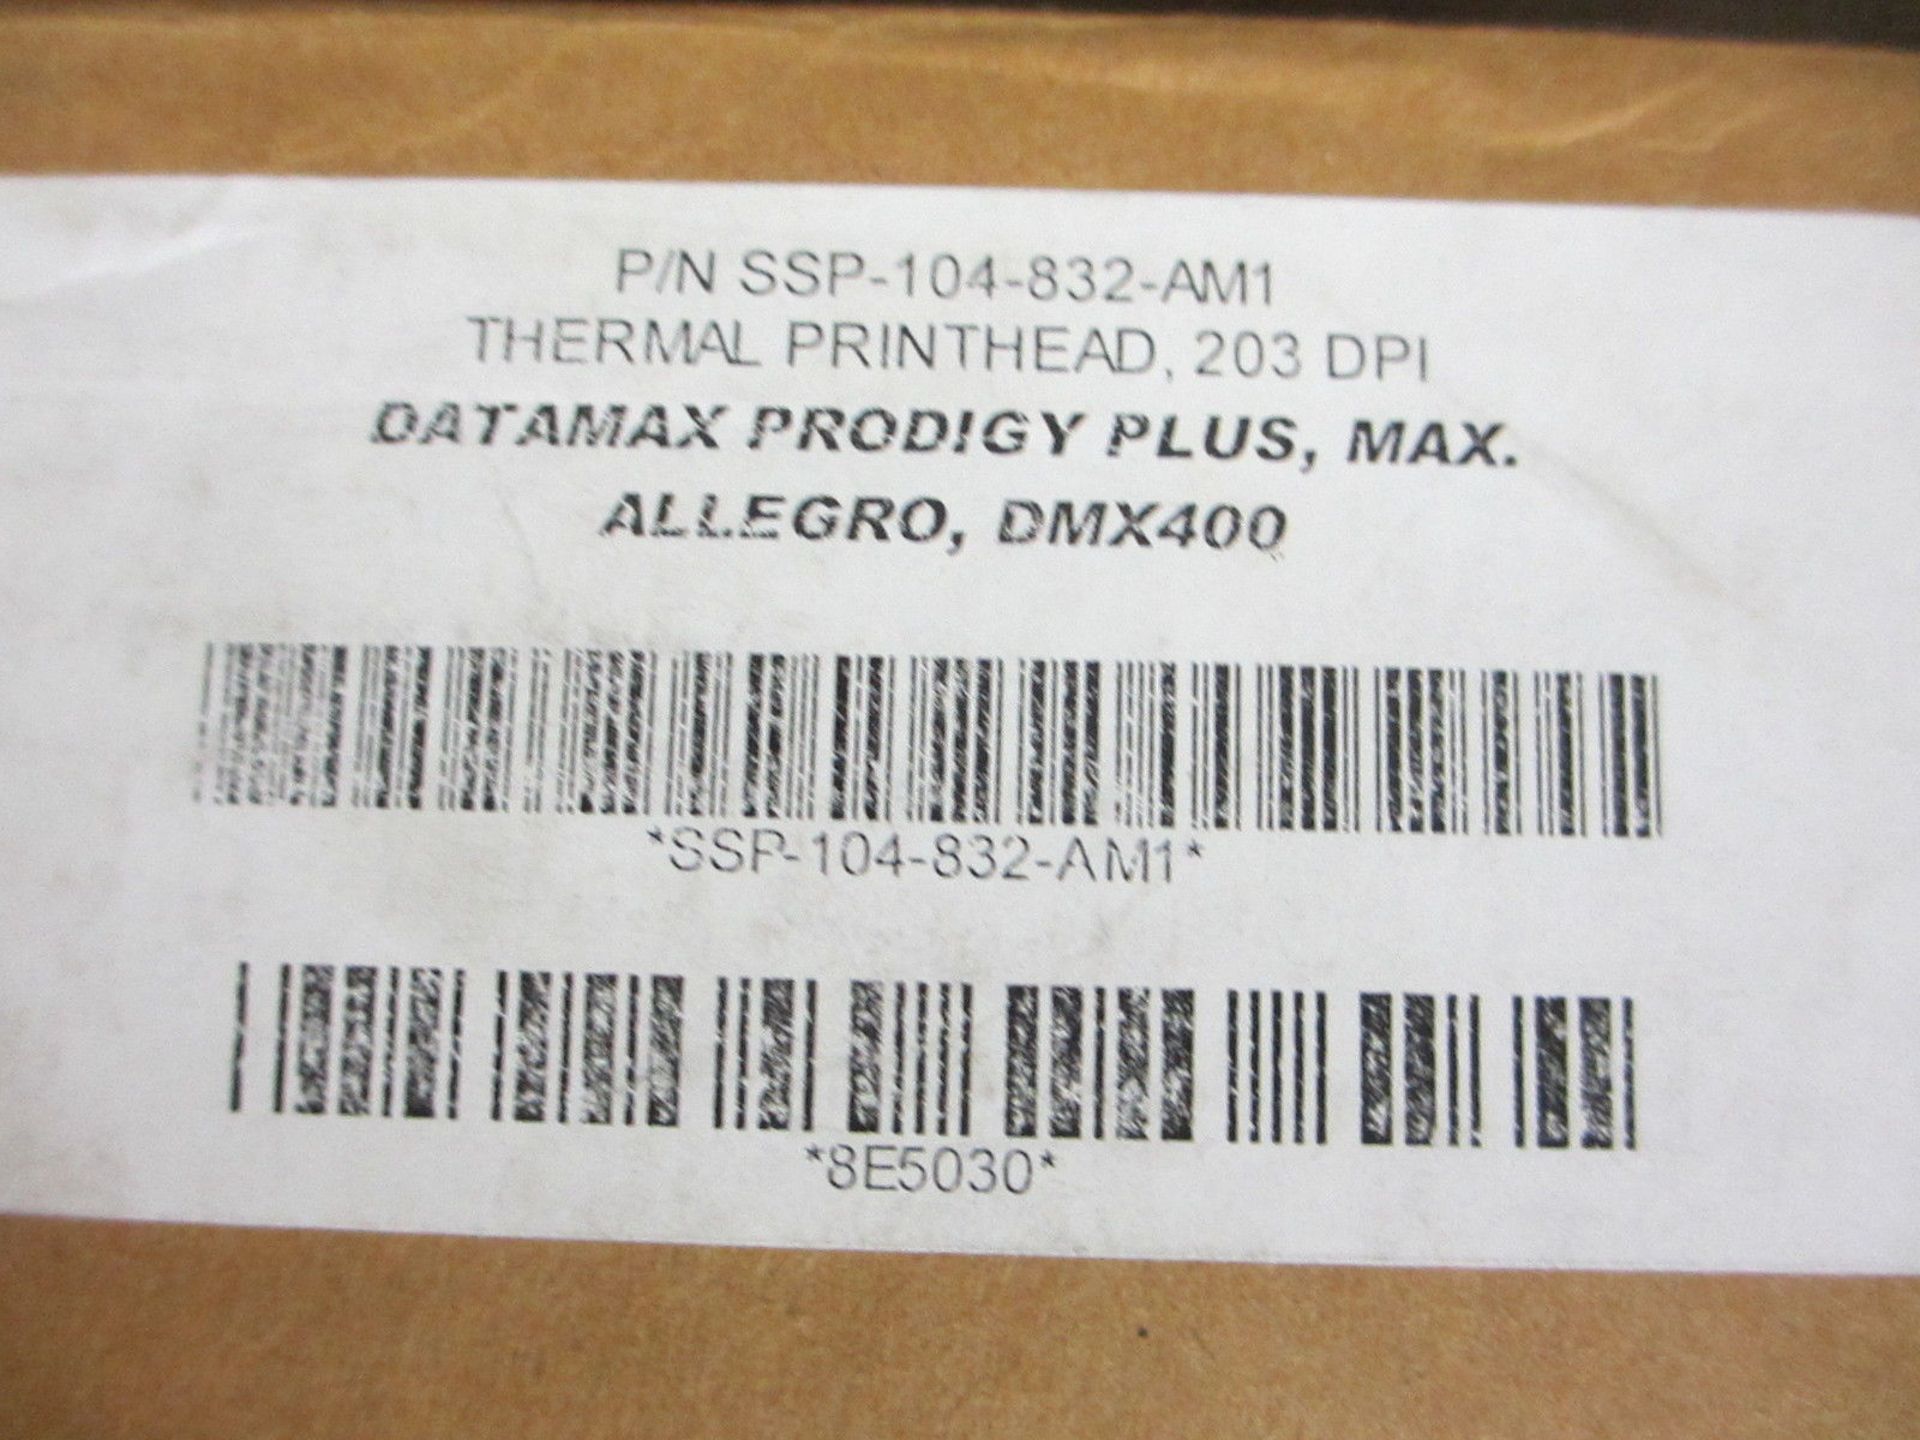 Datamax Prodigy Plus, MAX. Allegro, DMX400, SSP-104-832-AM1 Thermal Printhead, 2